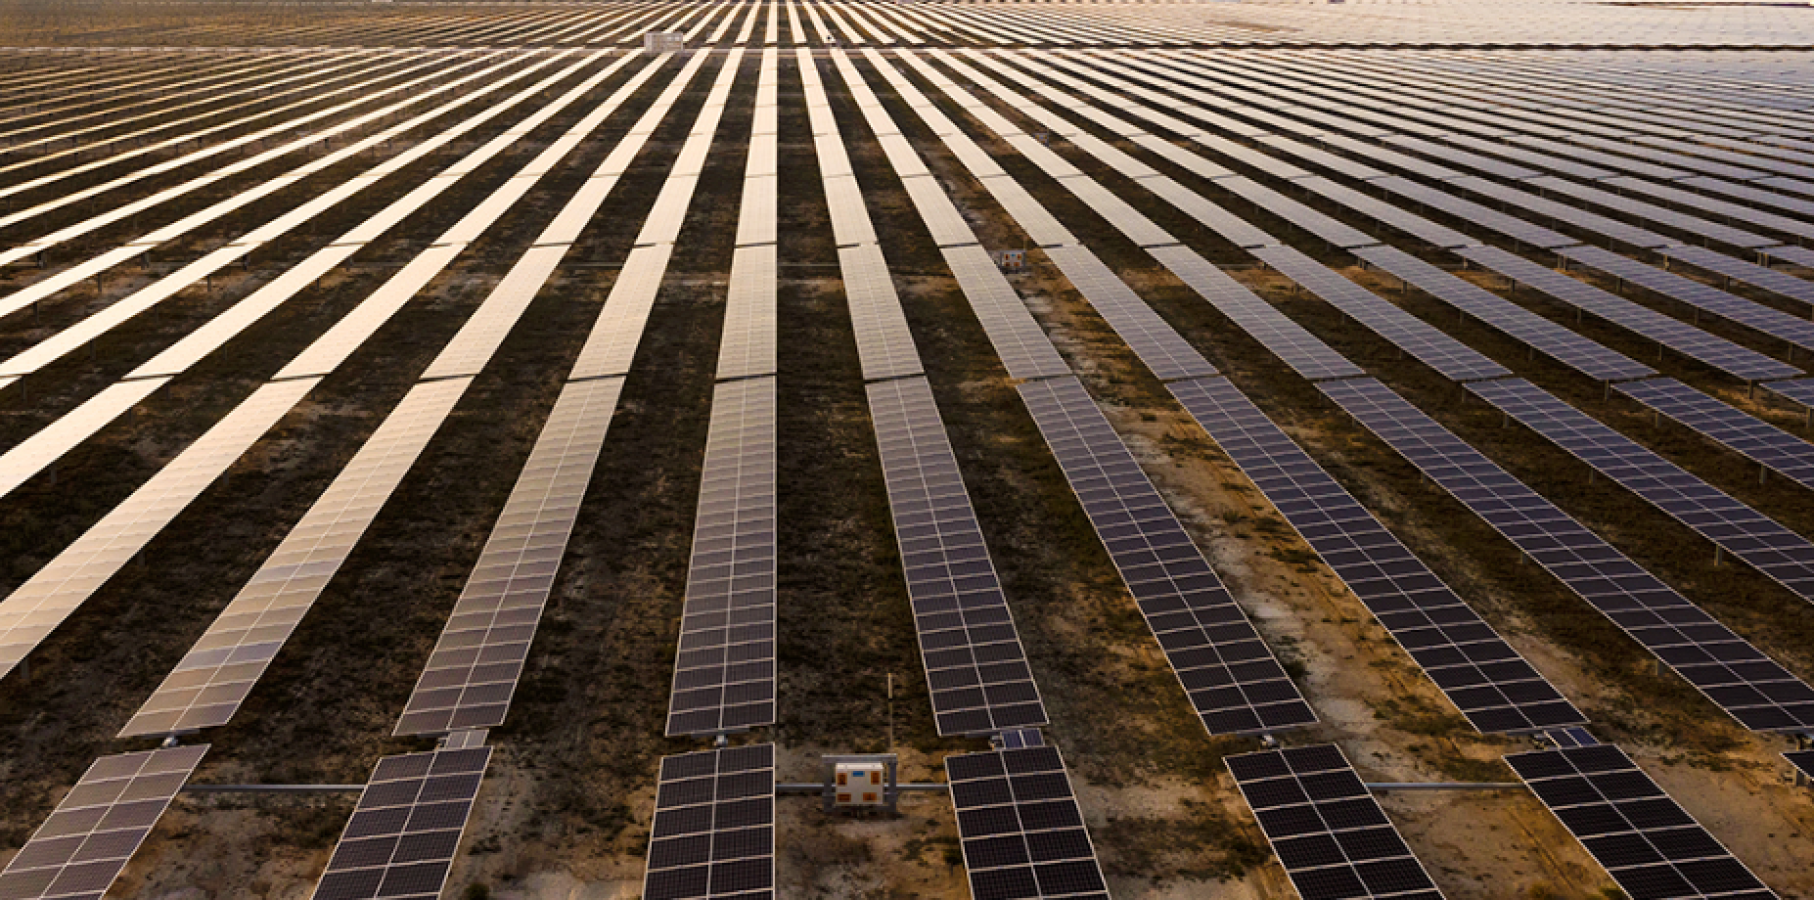 Viranşehir’e güneş enerji santrali kurulacak